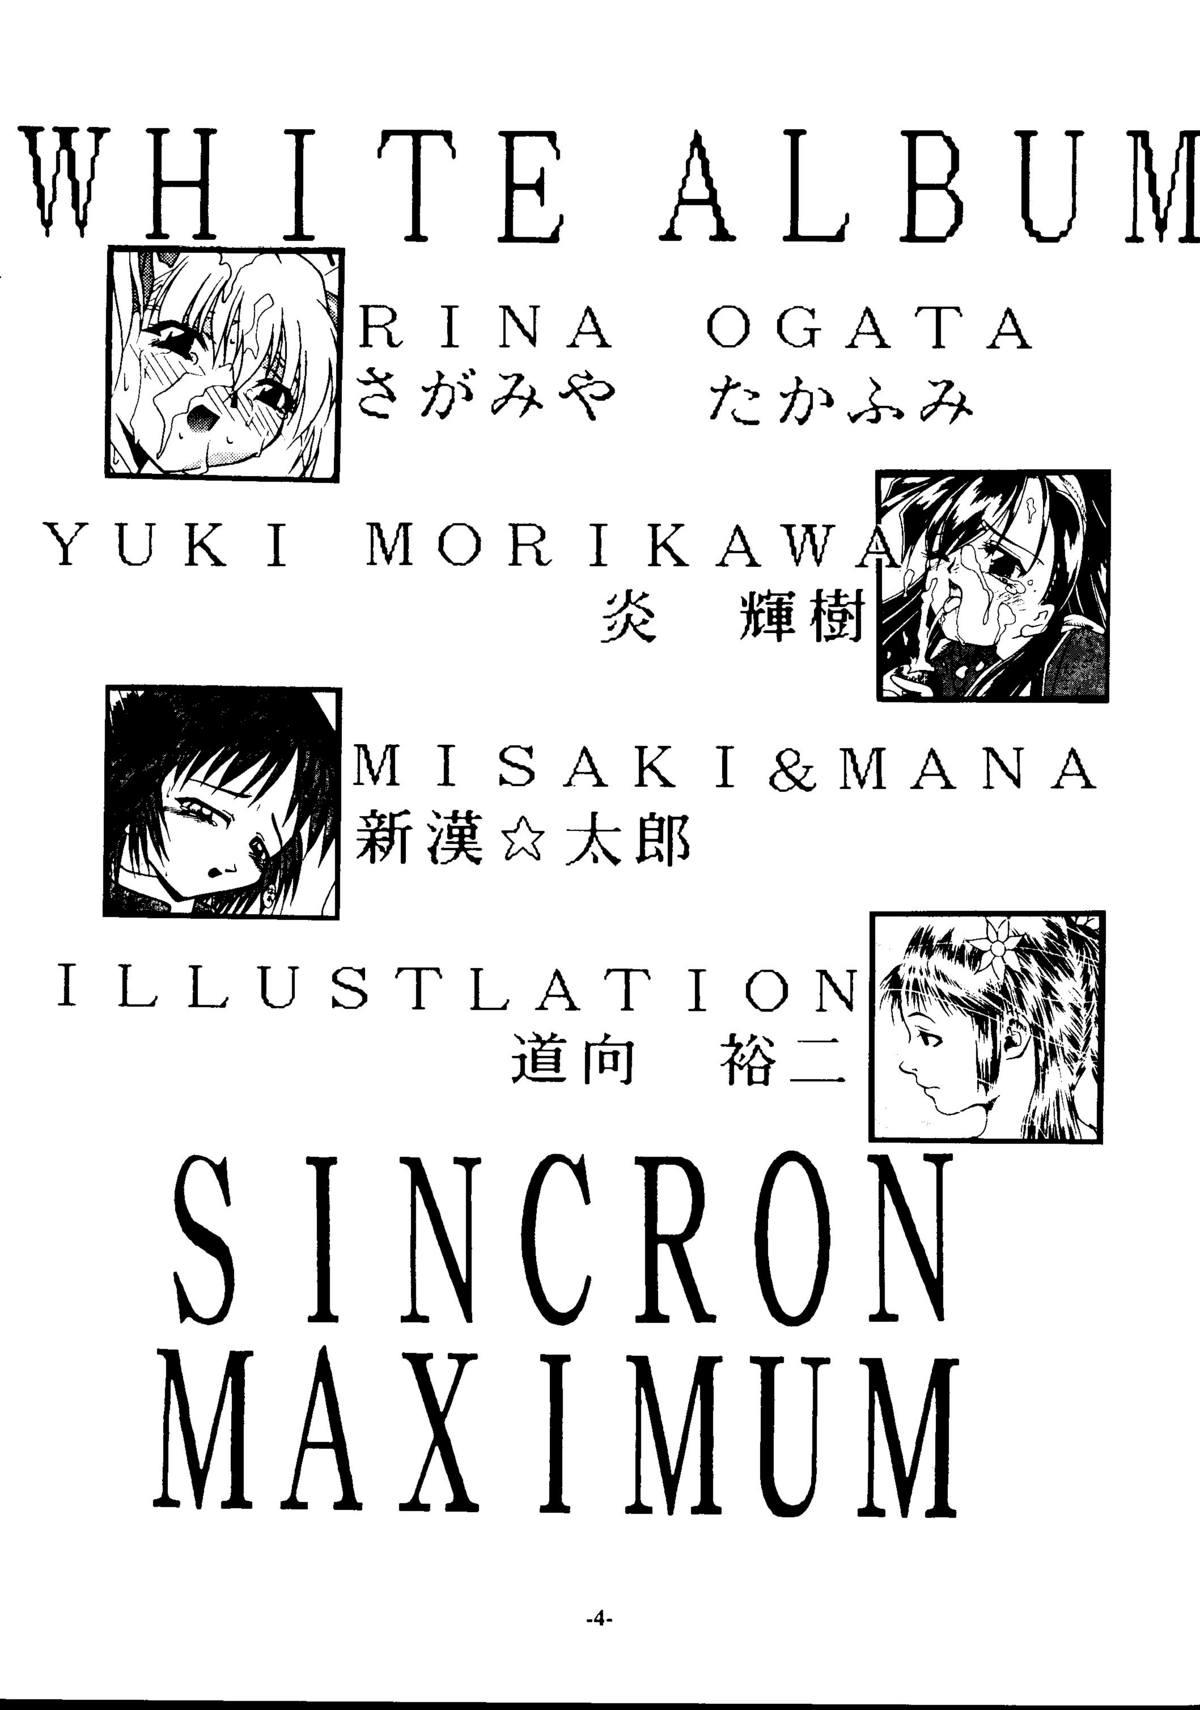 Stream Sincron Maximum - White album All - Page 3